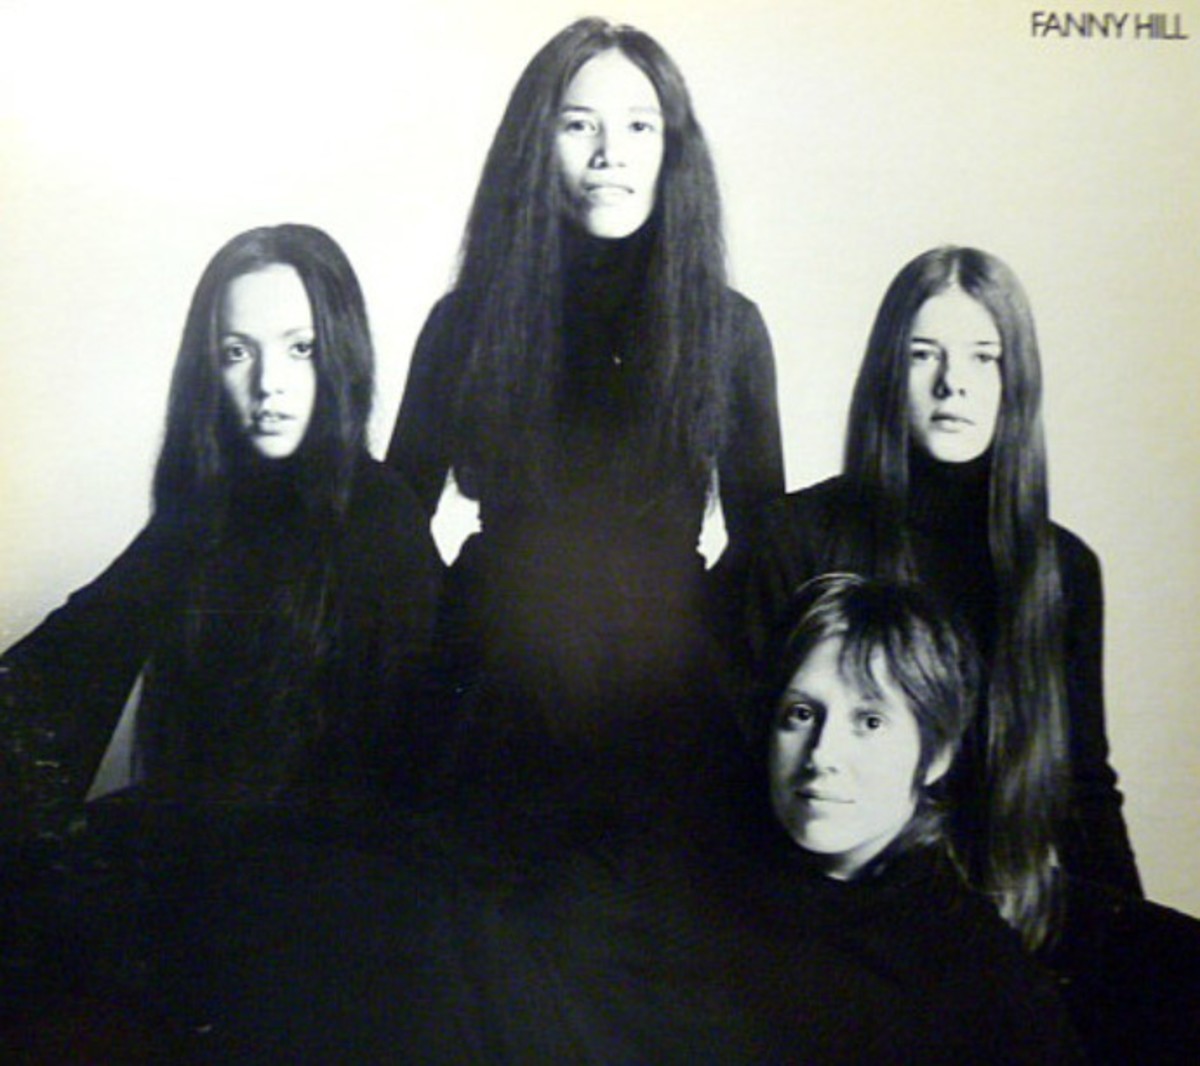 Back row: Jean Millington – bass, June Millington – guitar, Alice DeBuhr - drums, bottom: Nickey Barclay – keyboards, 1972